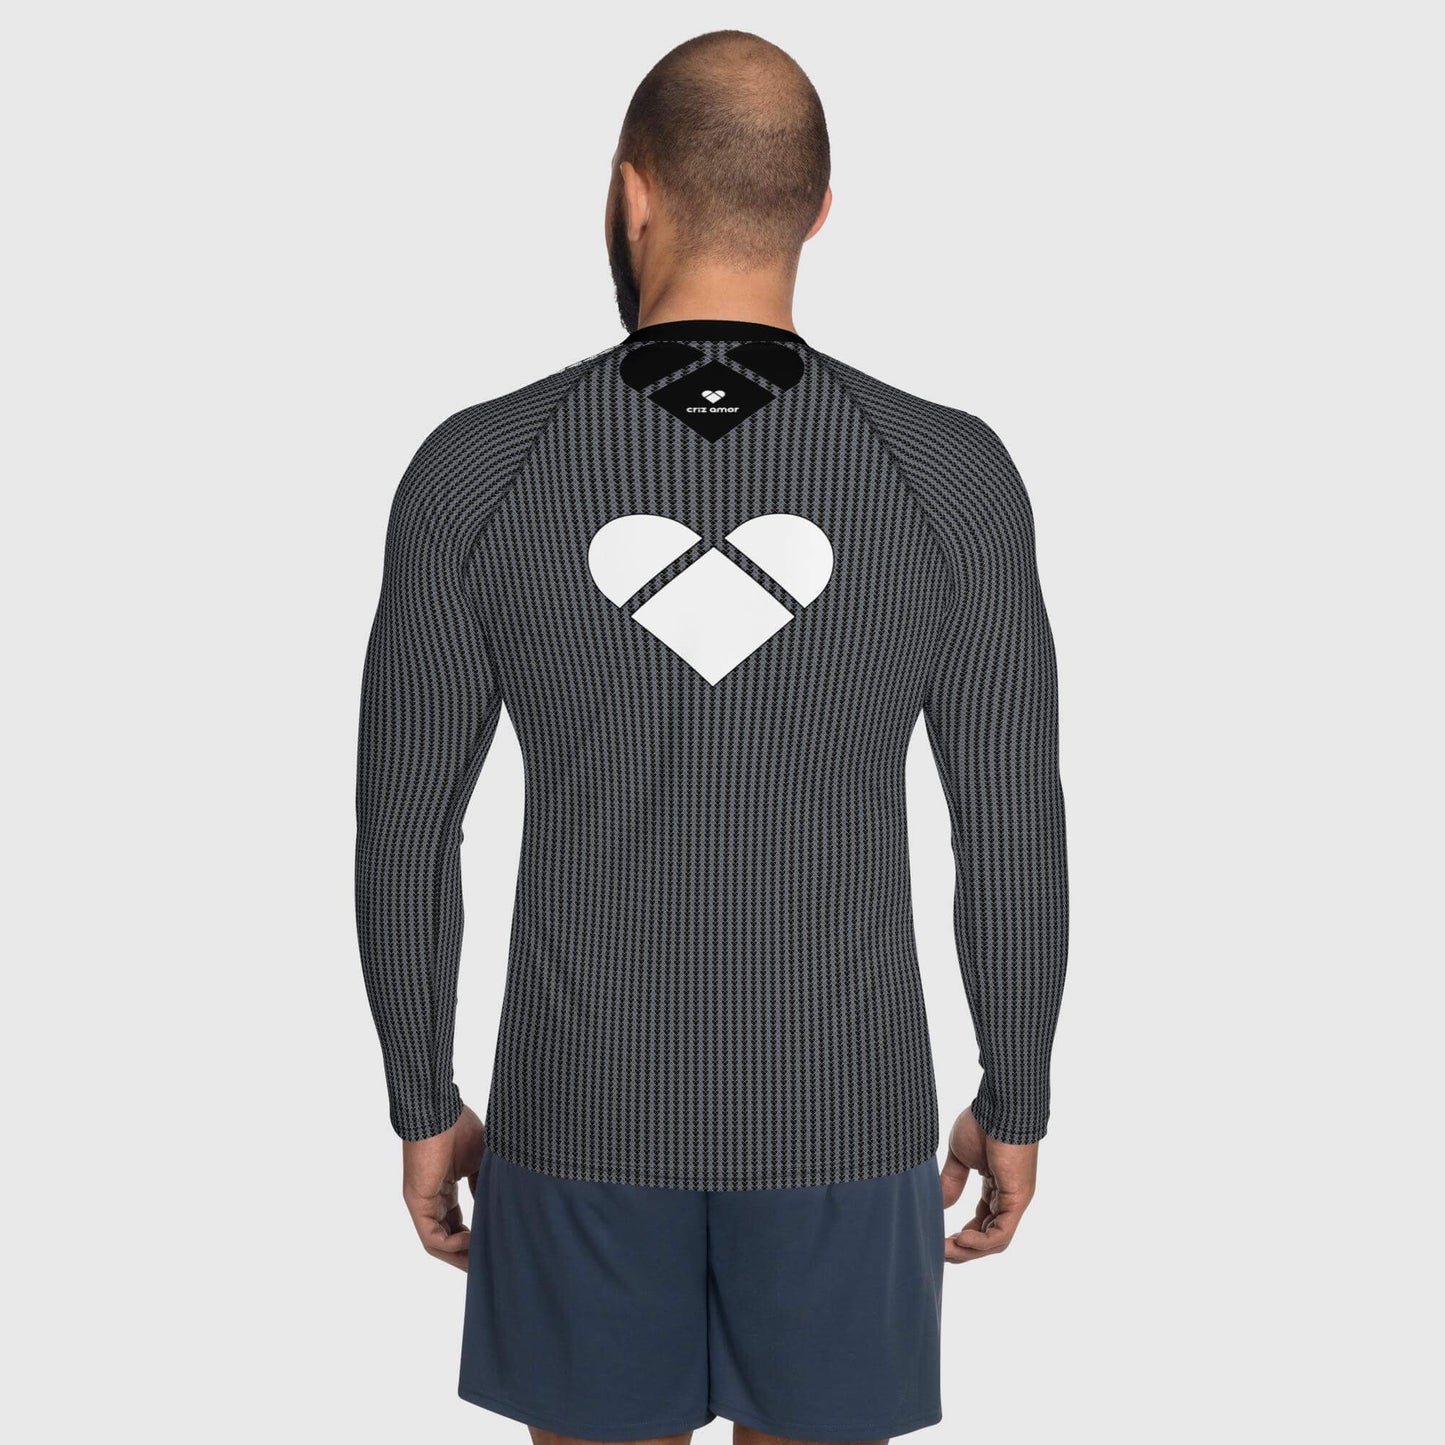 Versatile Lovogram Rash Guard, Perfect for Sports & Casual Wear |, big white heart